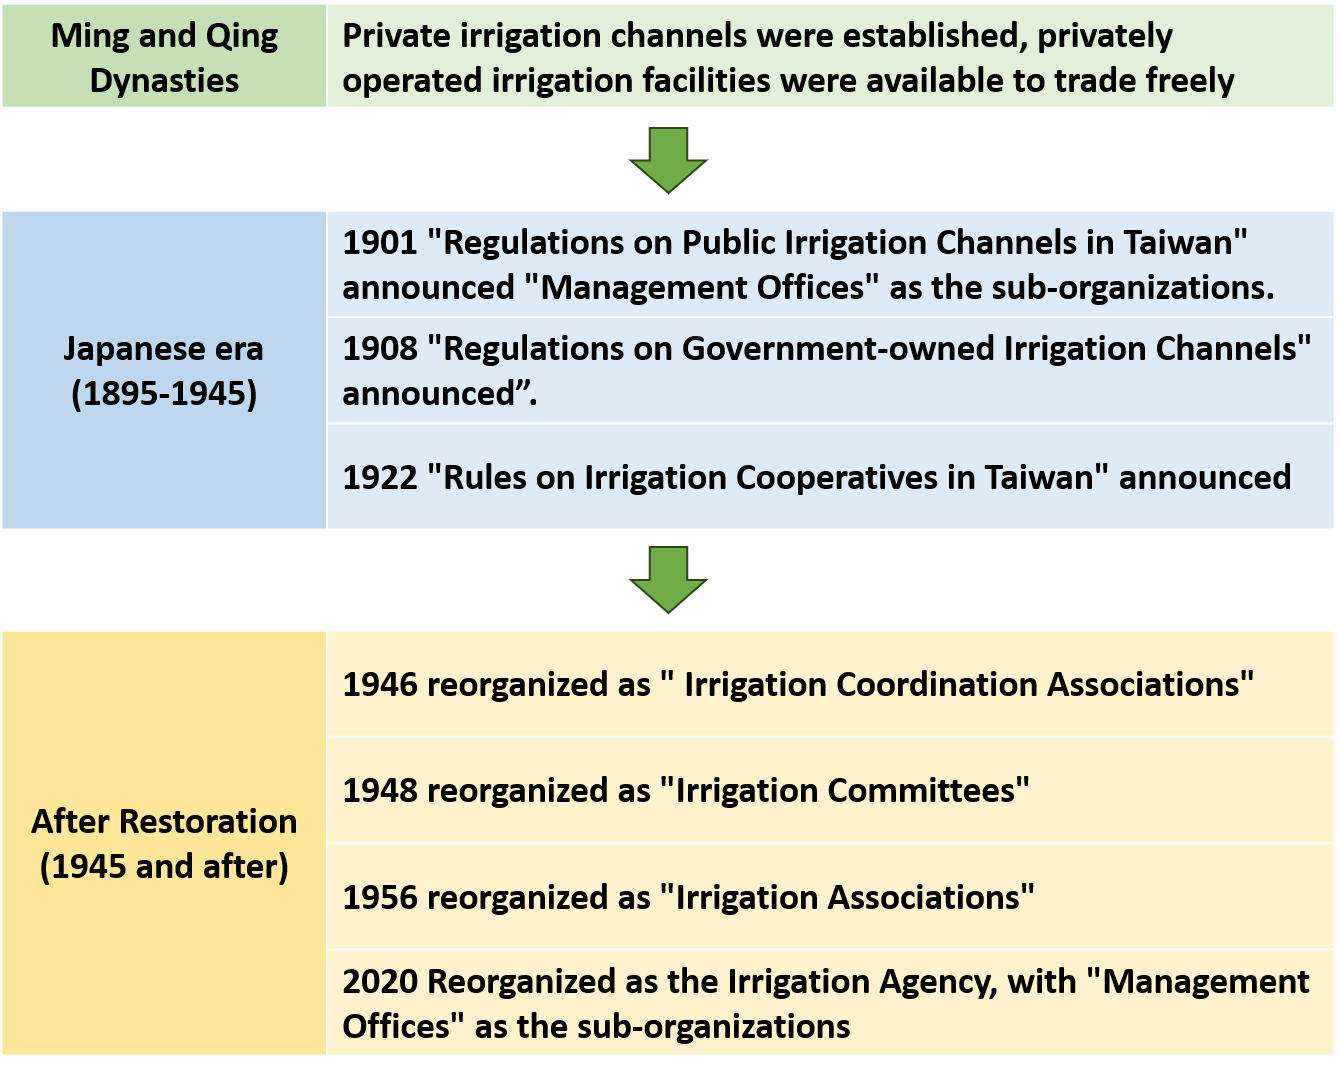 The history of irrigation organization